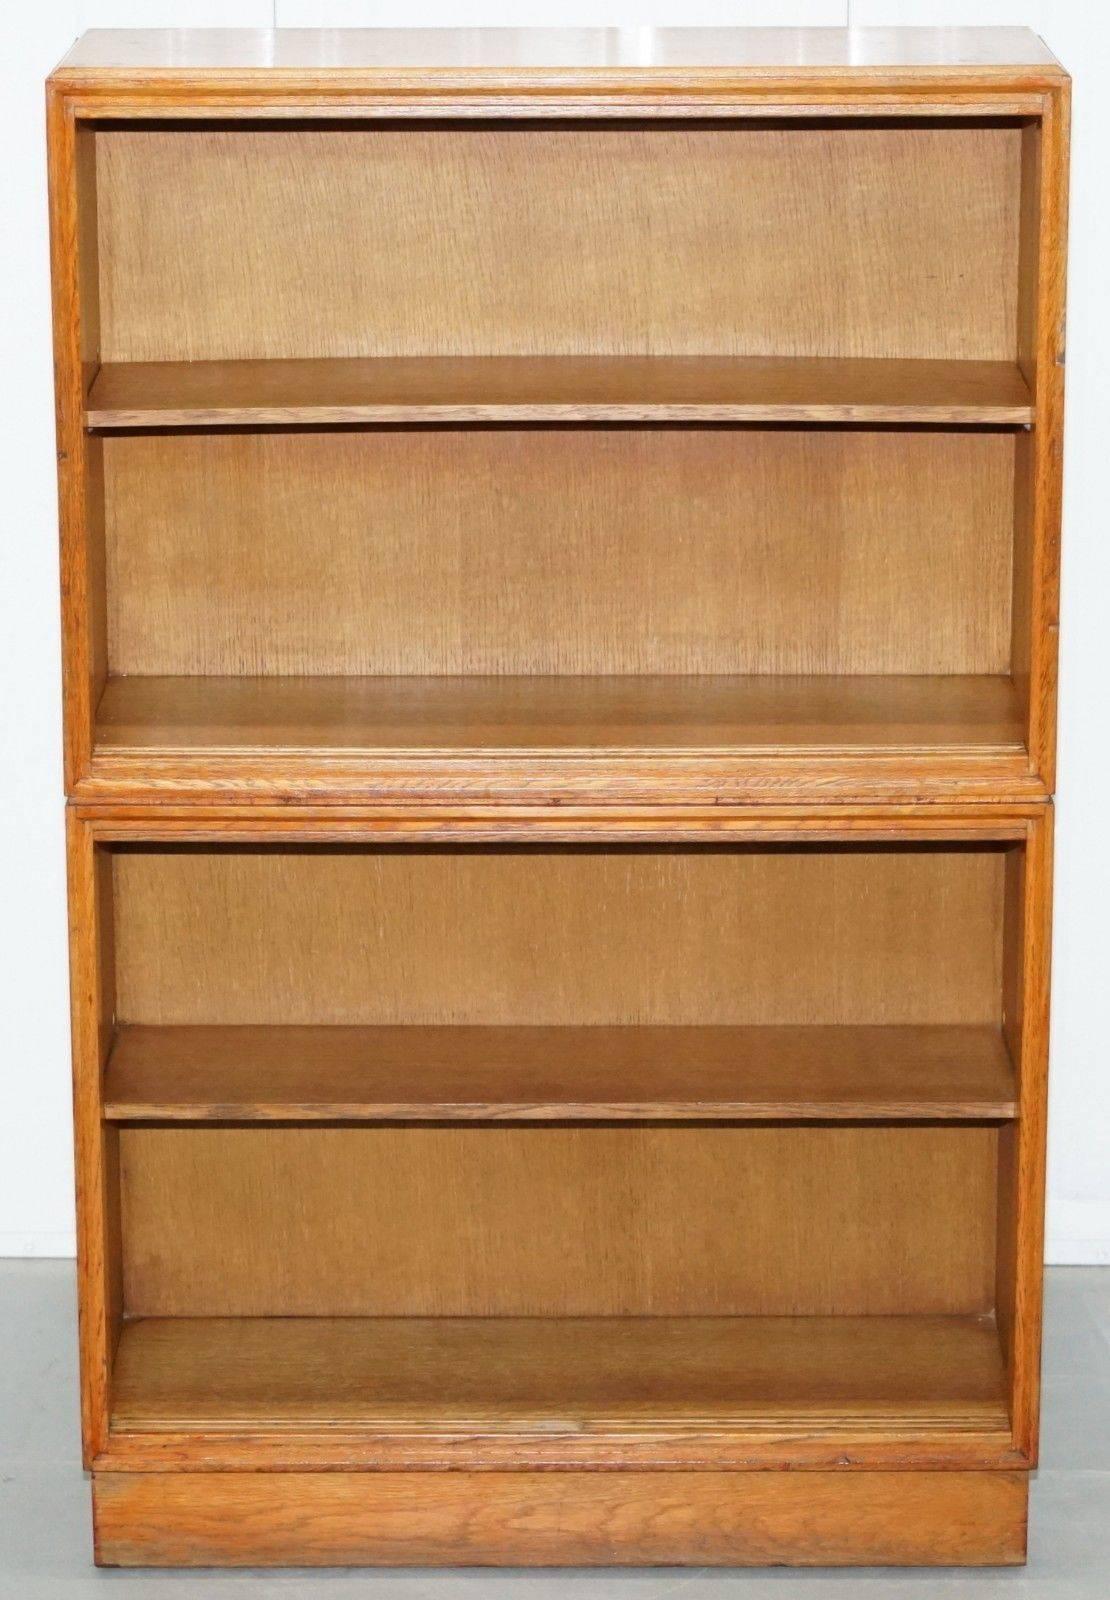 British Meredew Furniture Mid-Century Modern Light Oak Stacking Bookcase Made in England